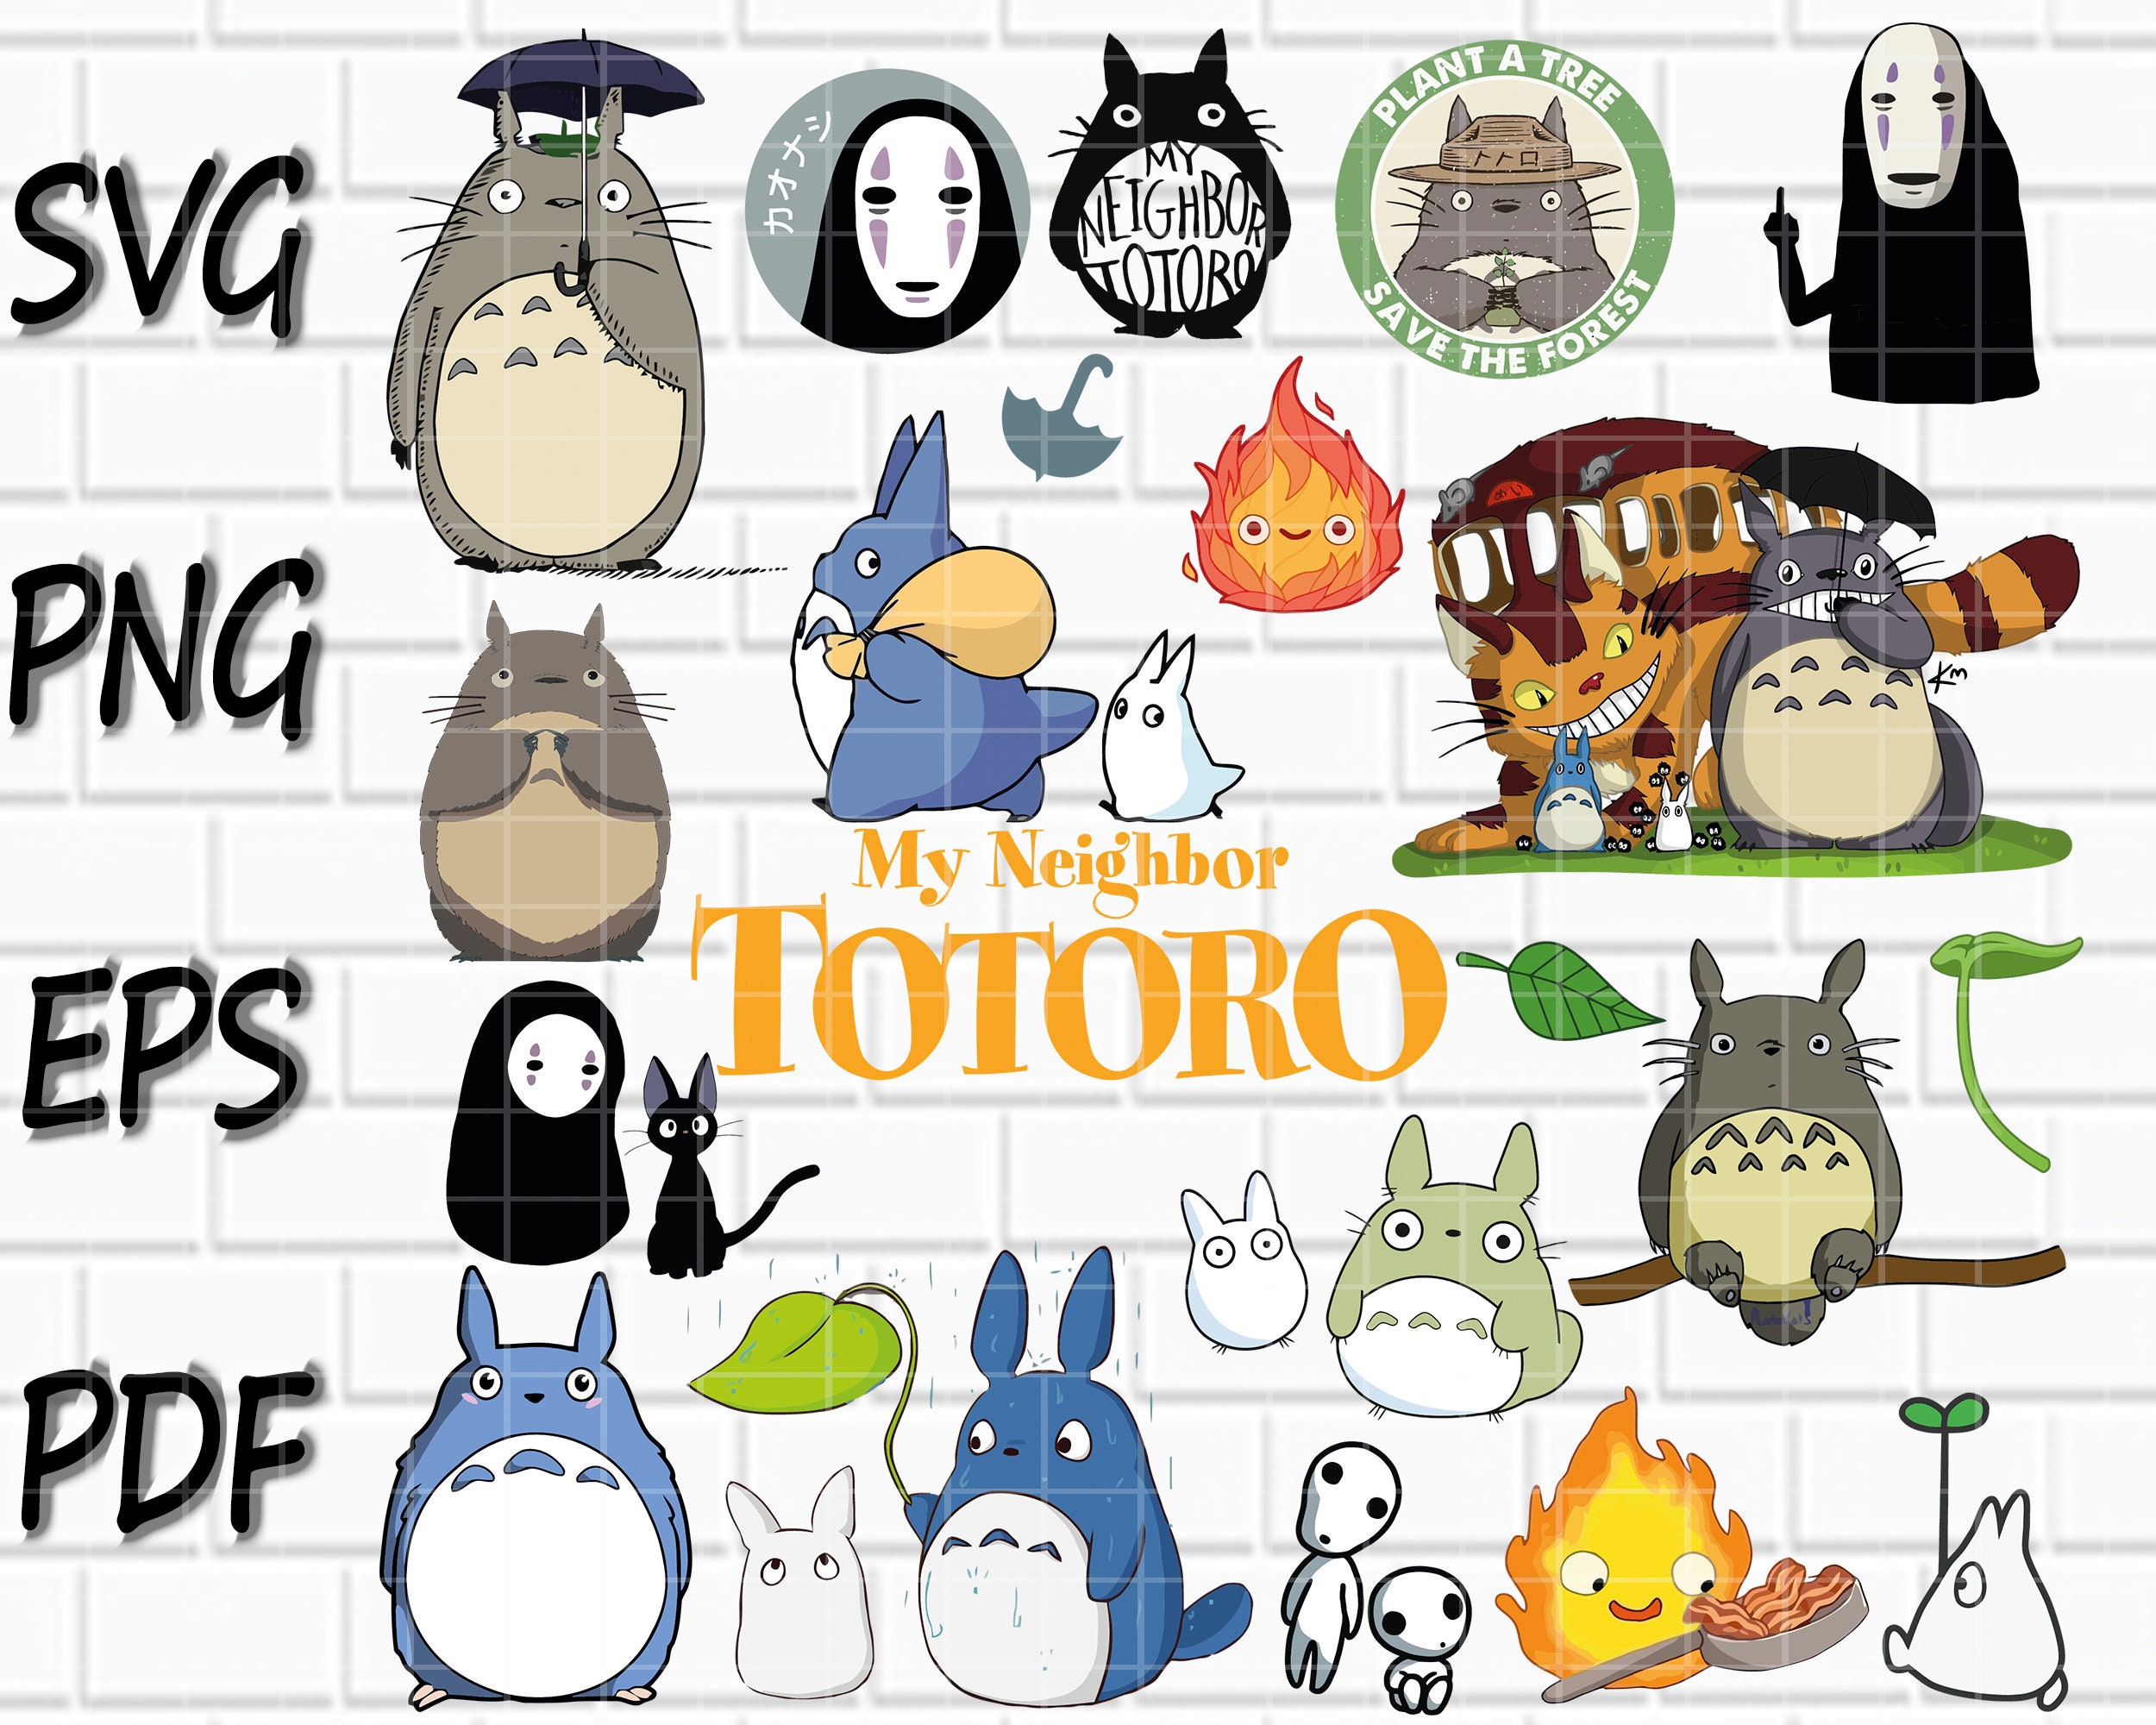 Studio Ghibli Toothbrush Holder: Totoro, No Face, Ponyo, Soot Sprites |  Ghibli Merch Store